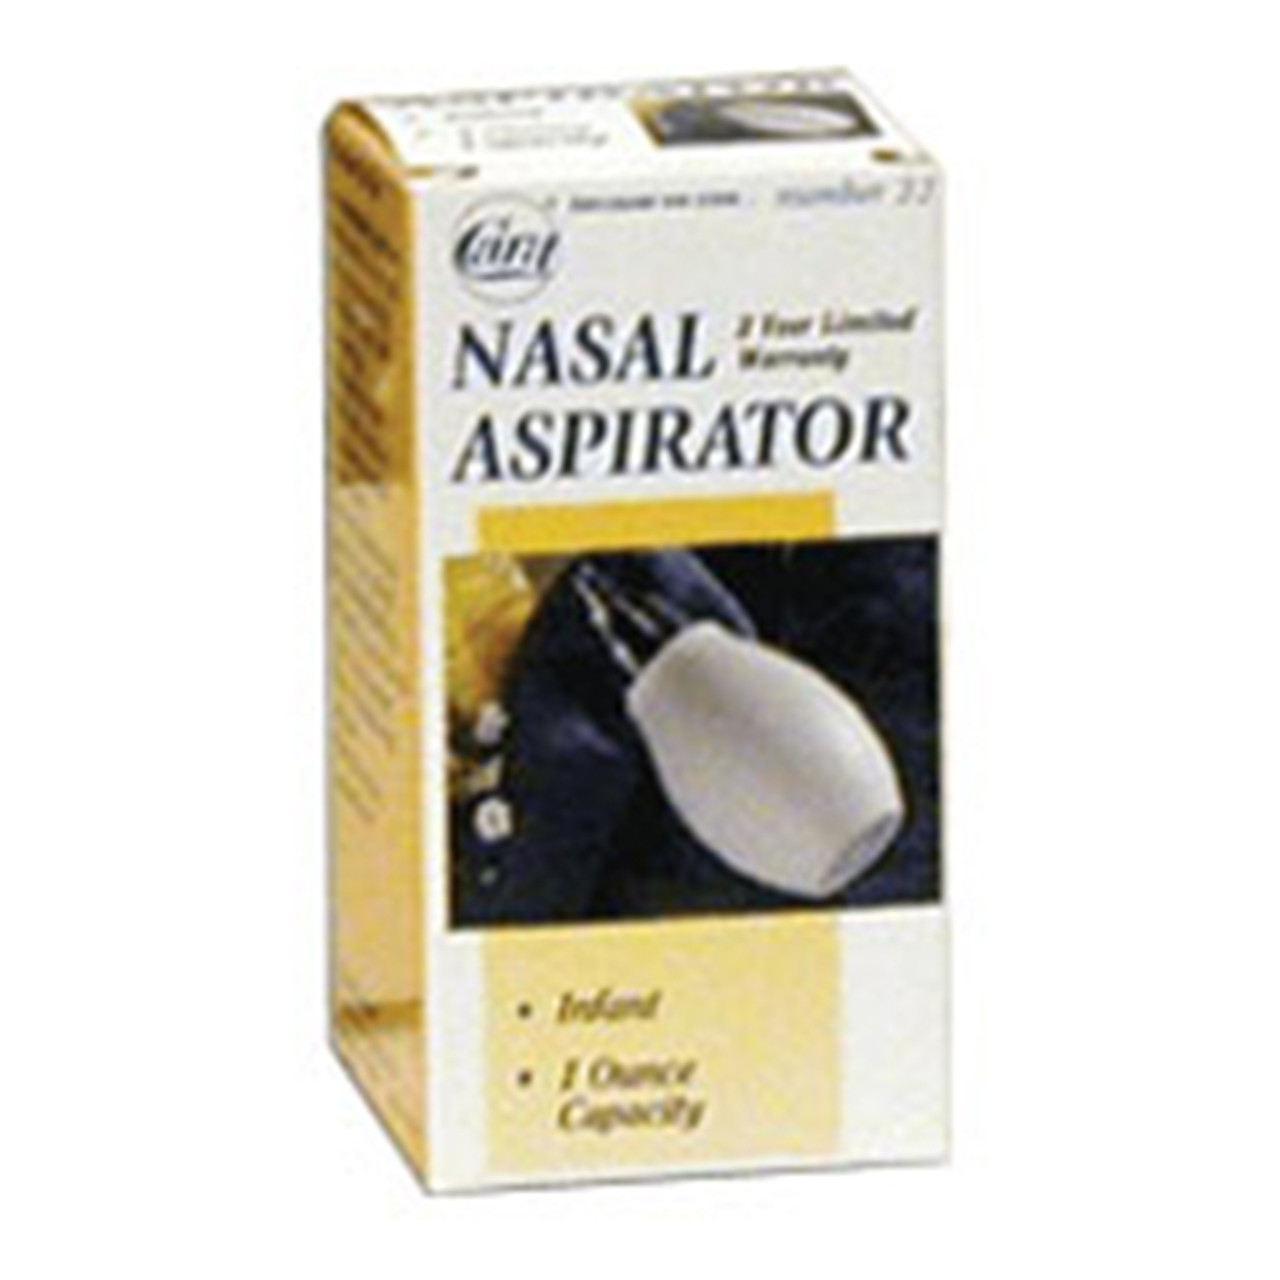 Apex Baby Nasal Aspirator